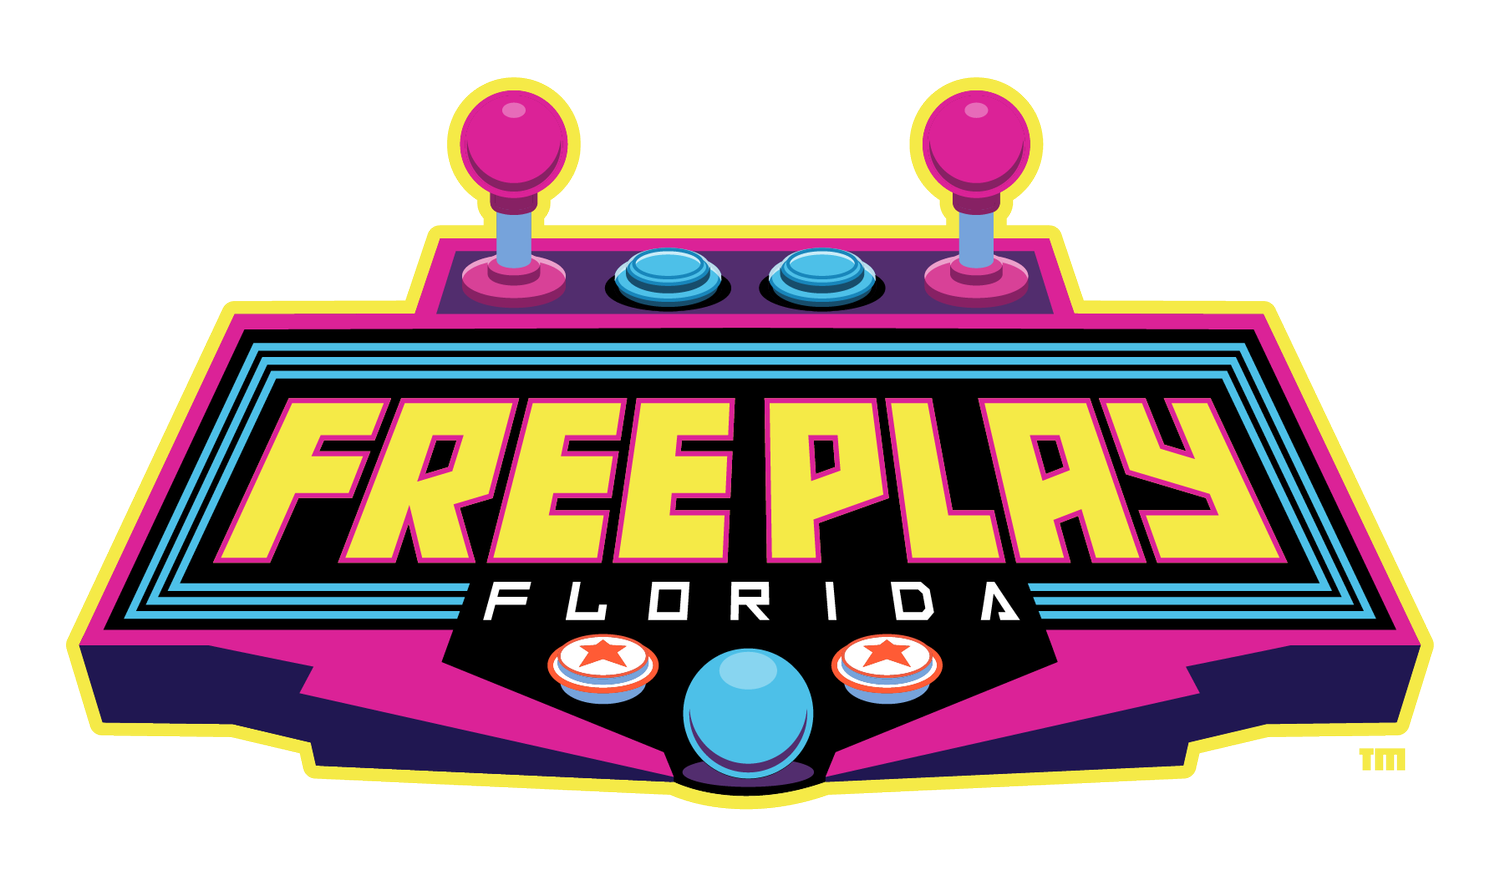 Free Play Florida